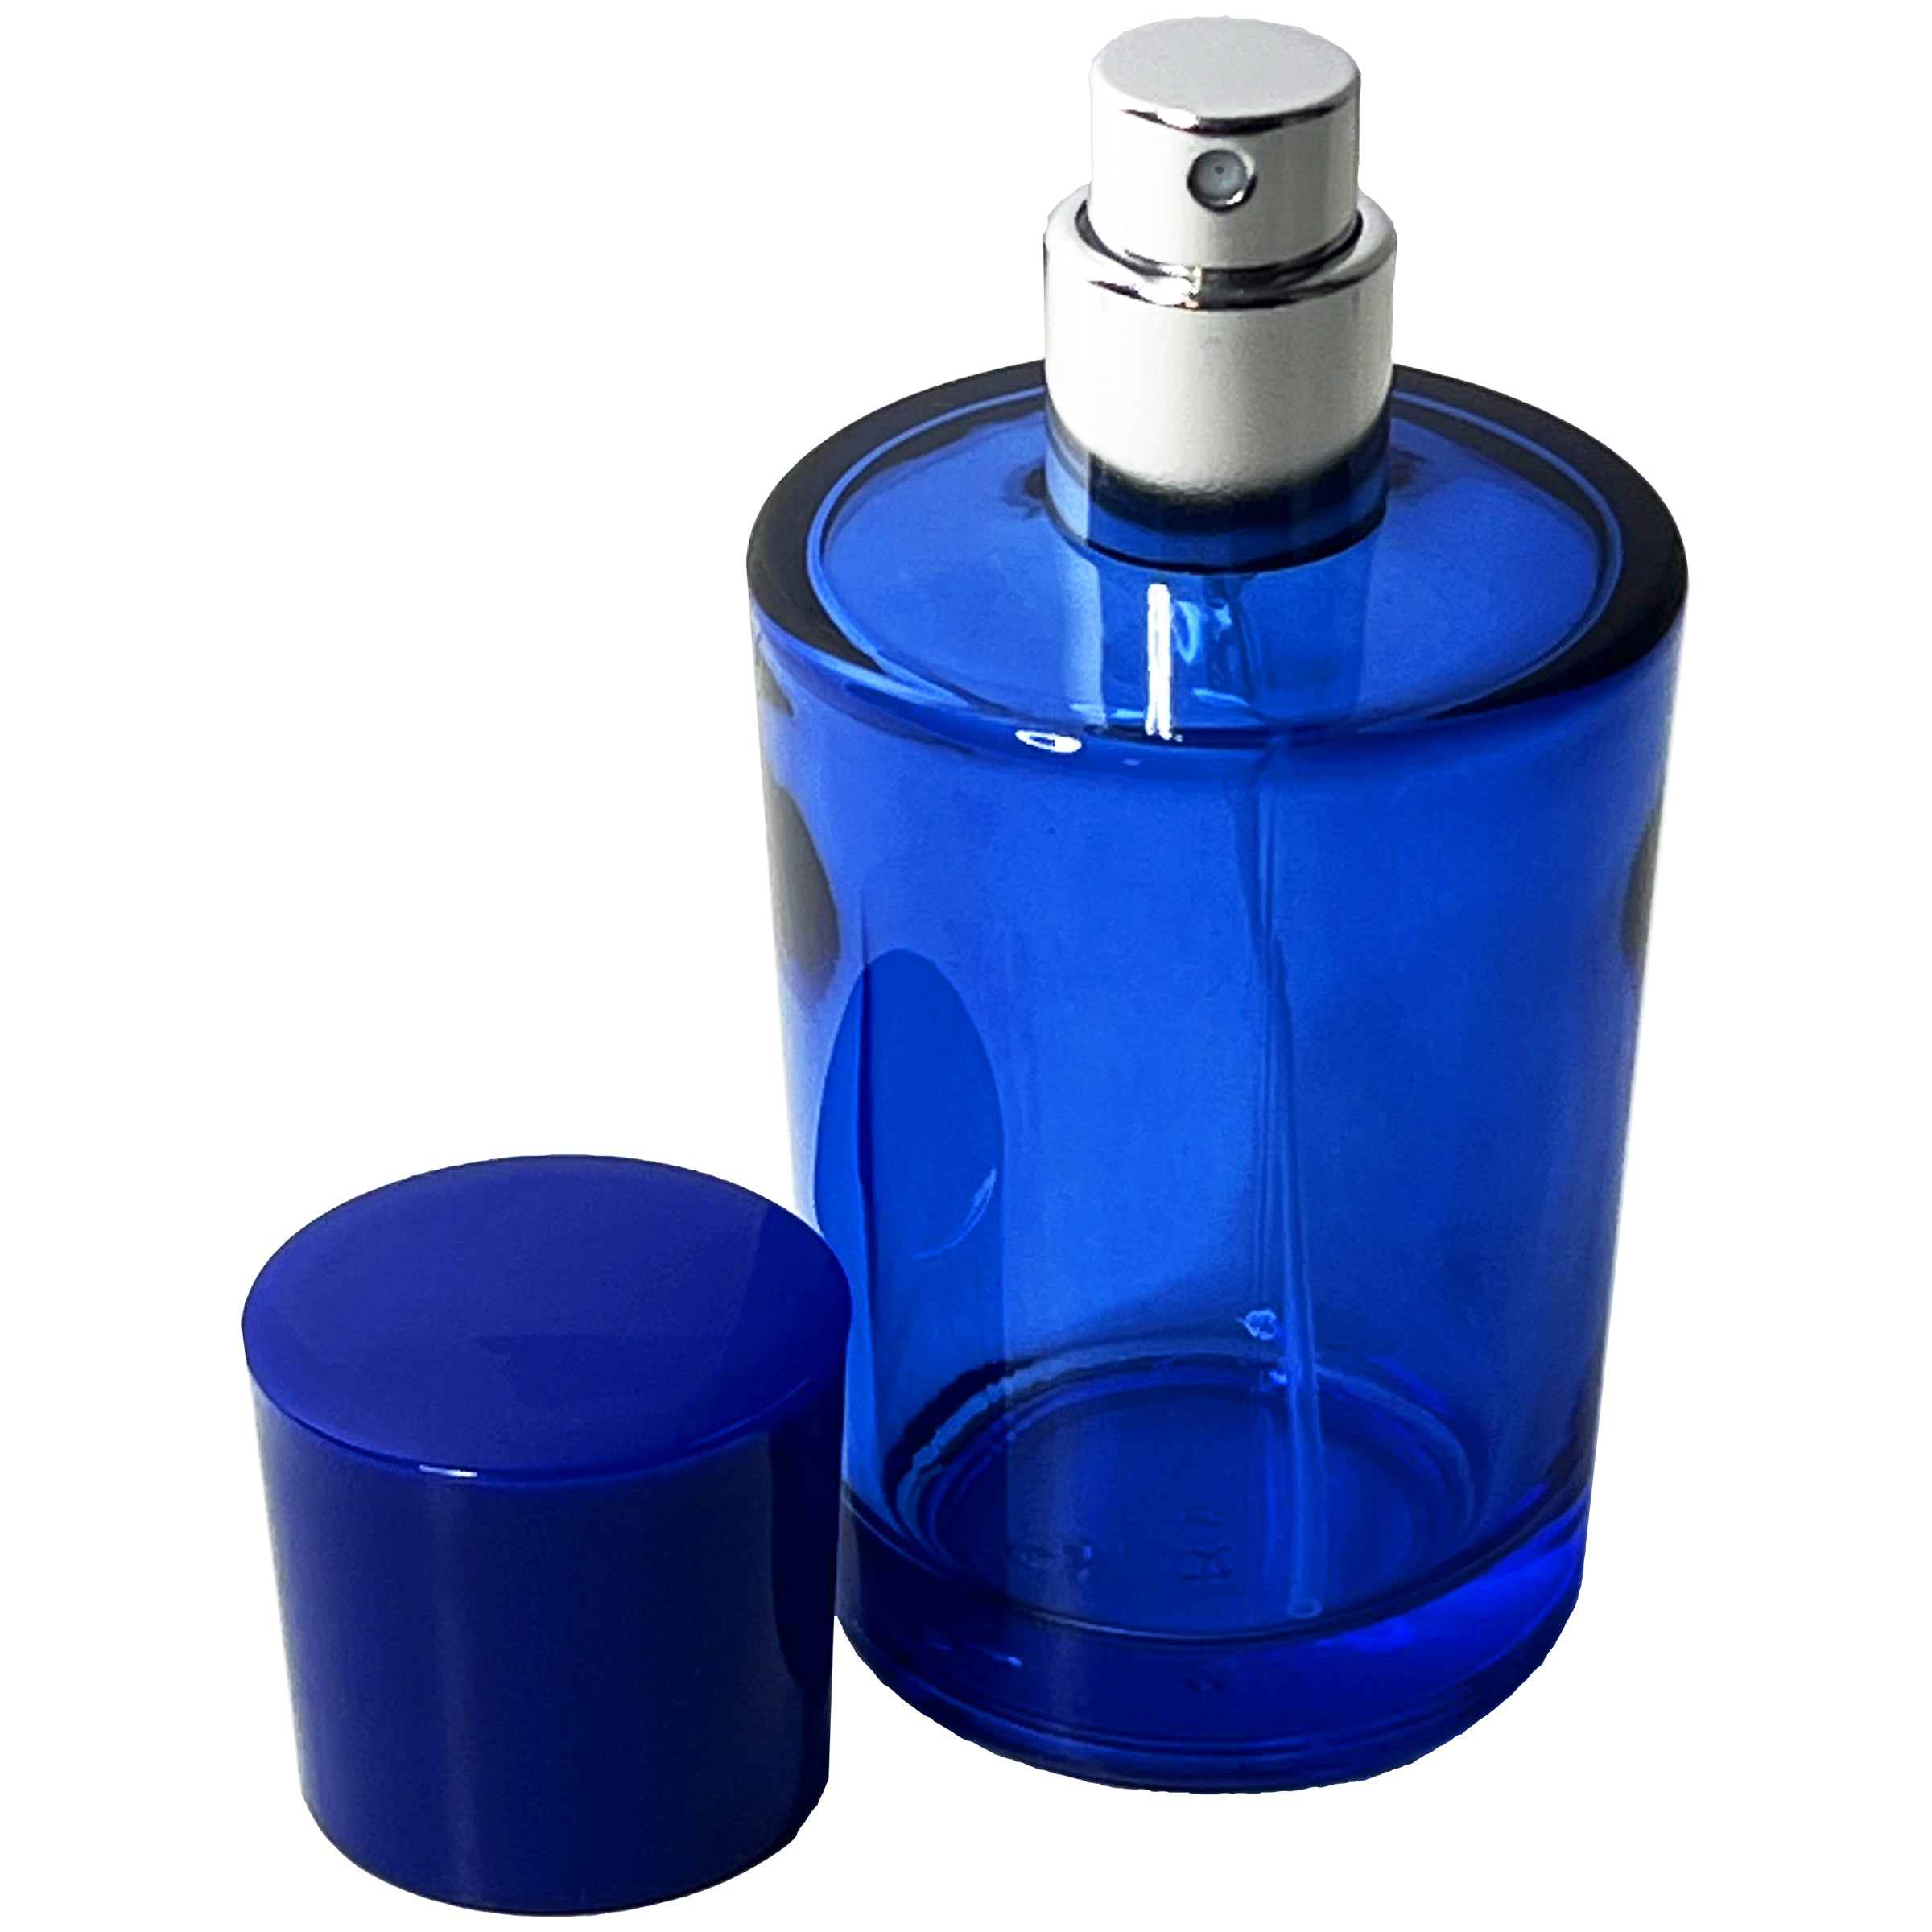 50ml 1.7oz flat cone glass perfume bottles 4 colors